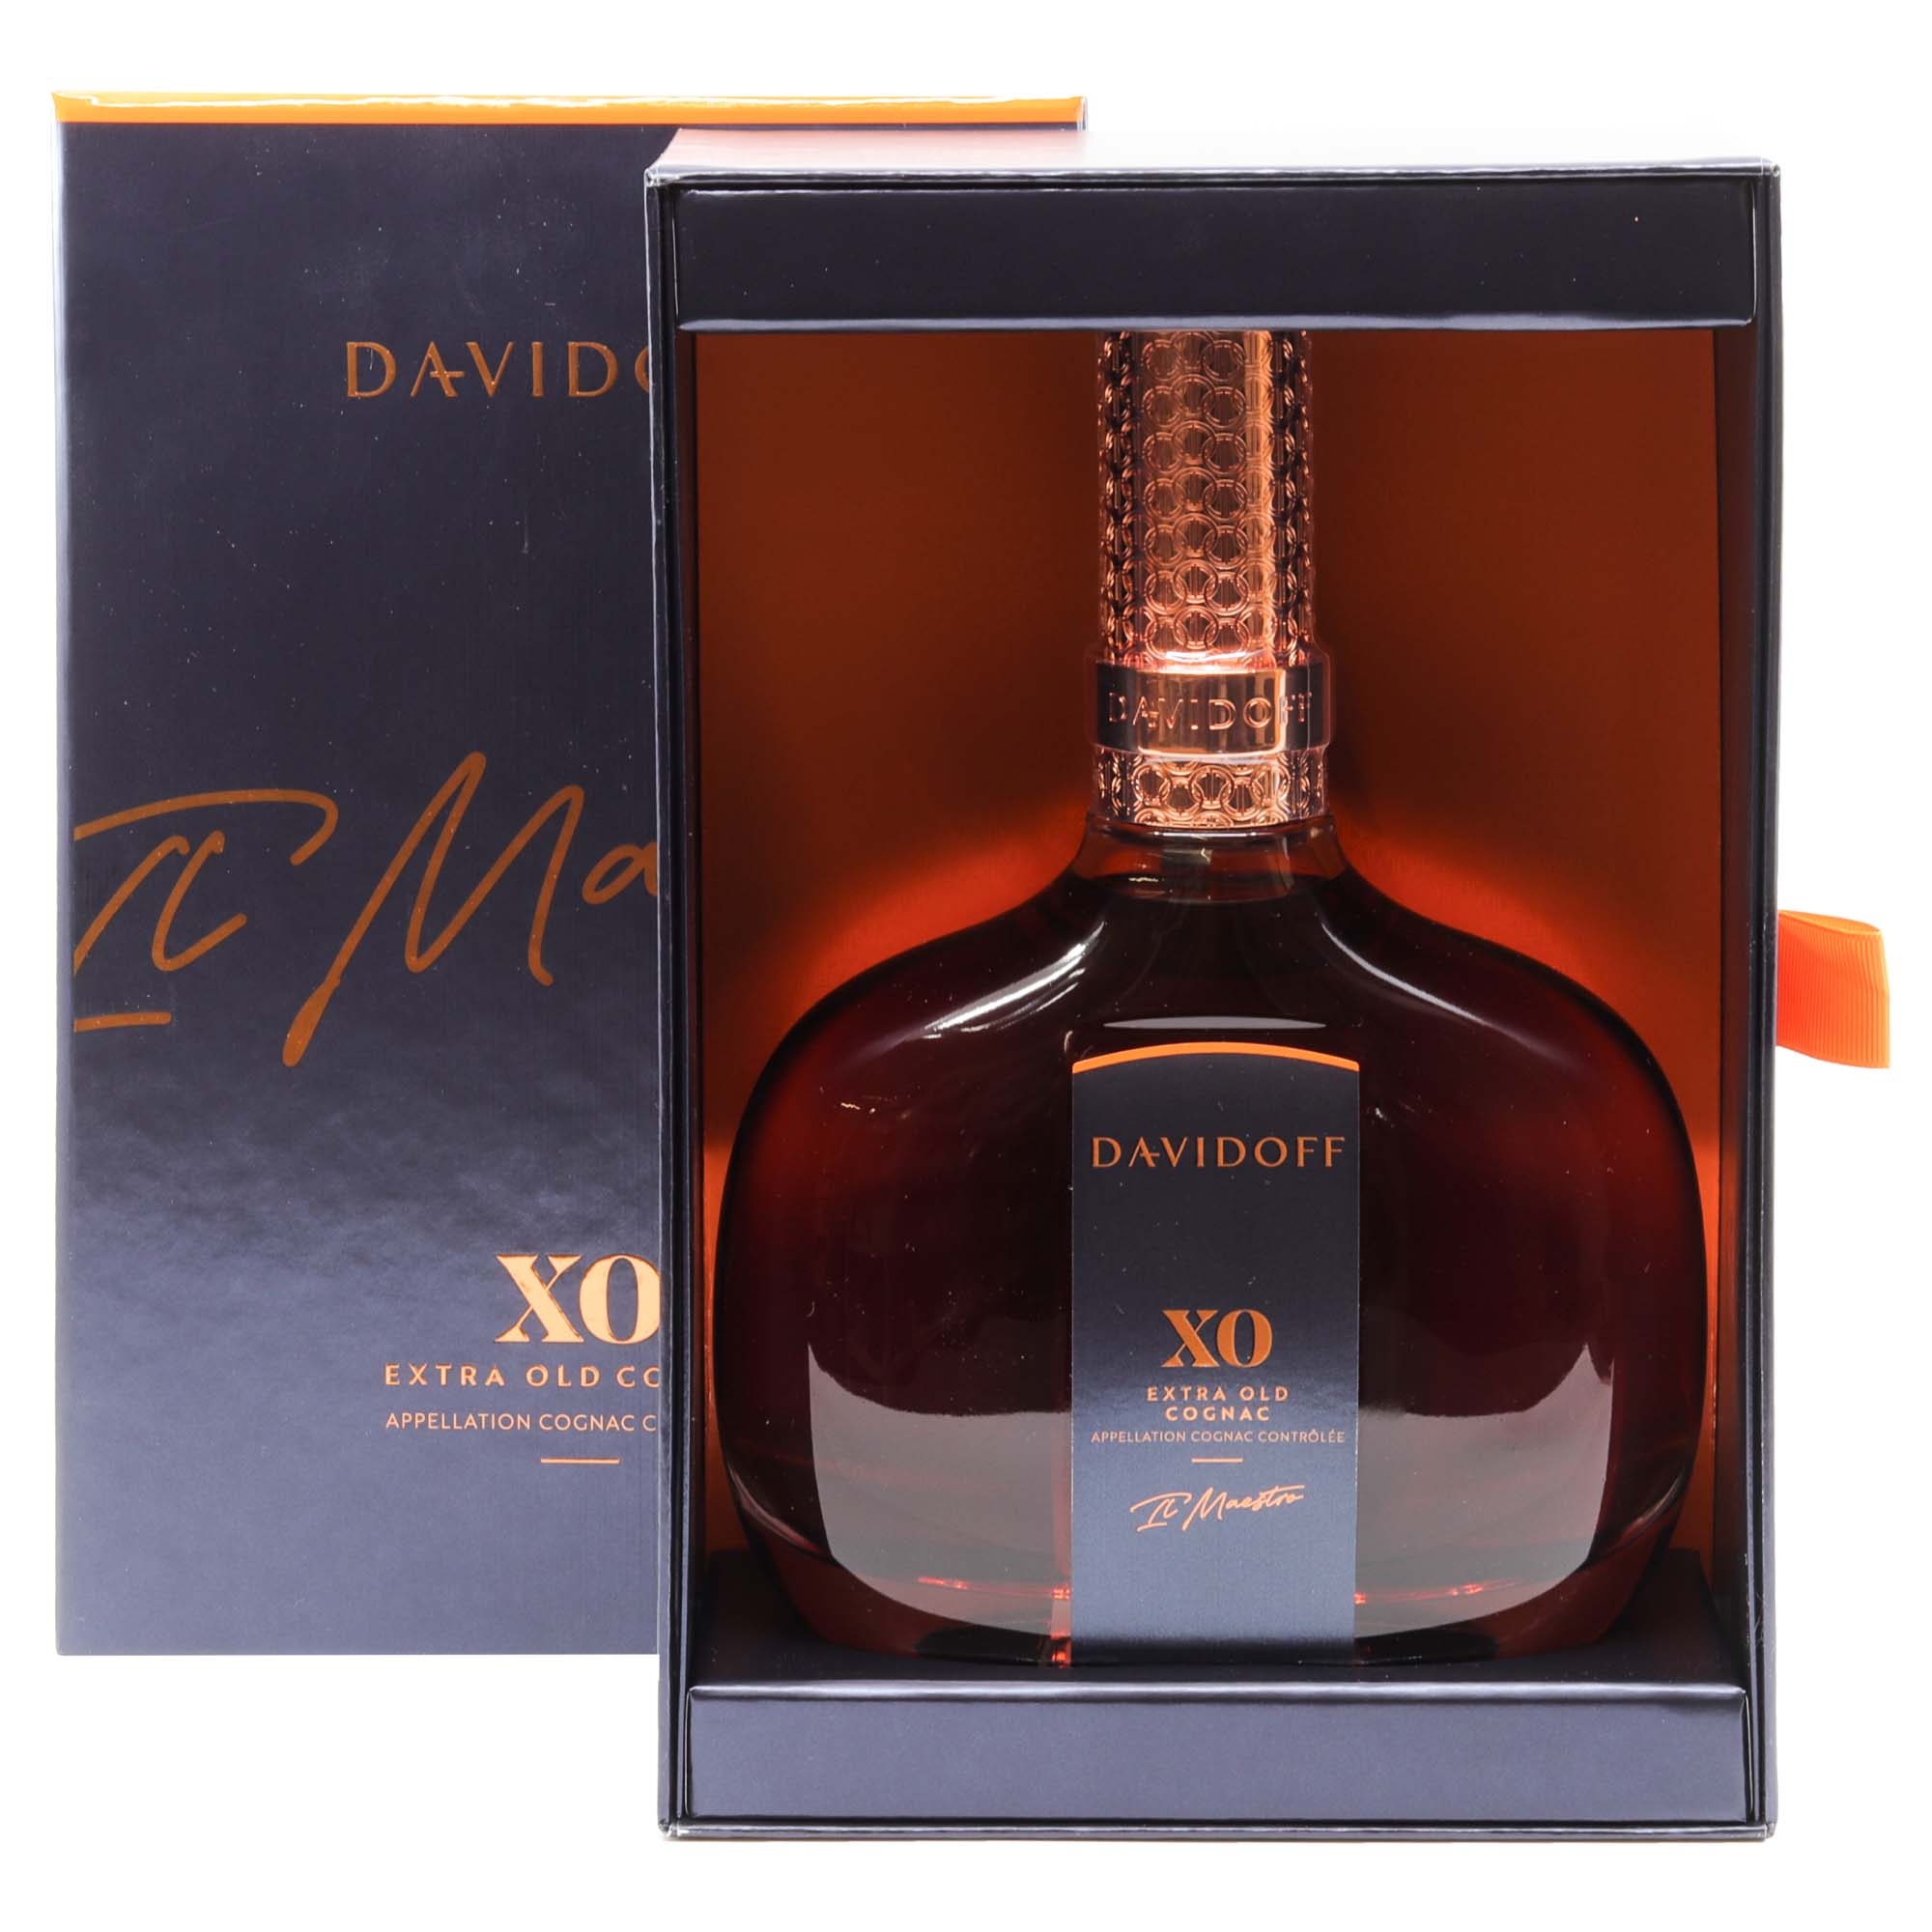 Davidoff XO Cognac 70cl